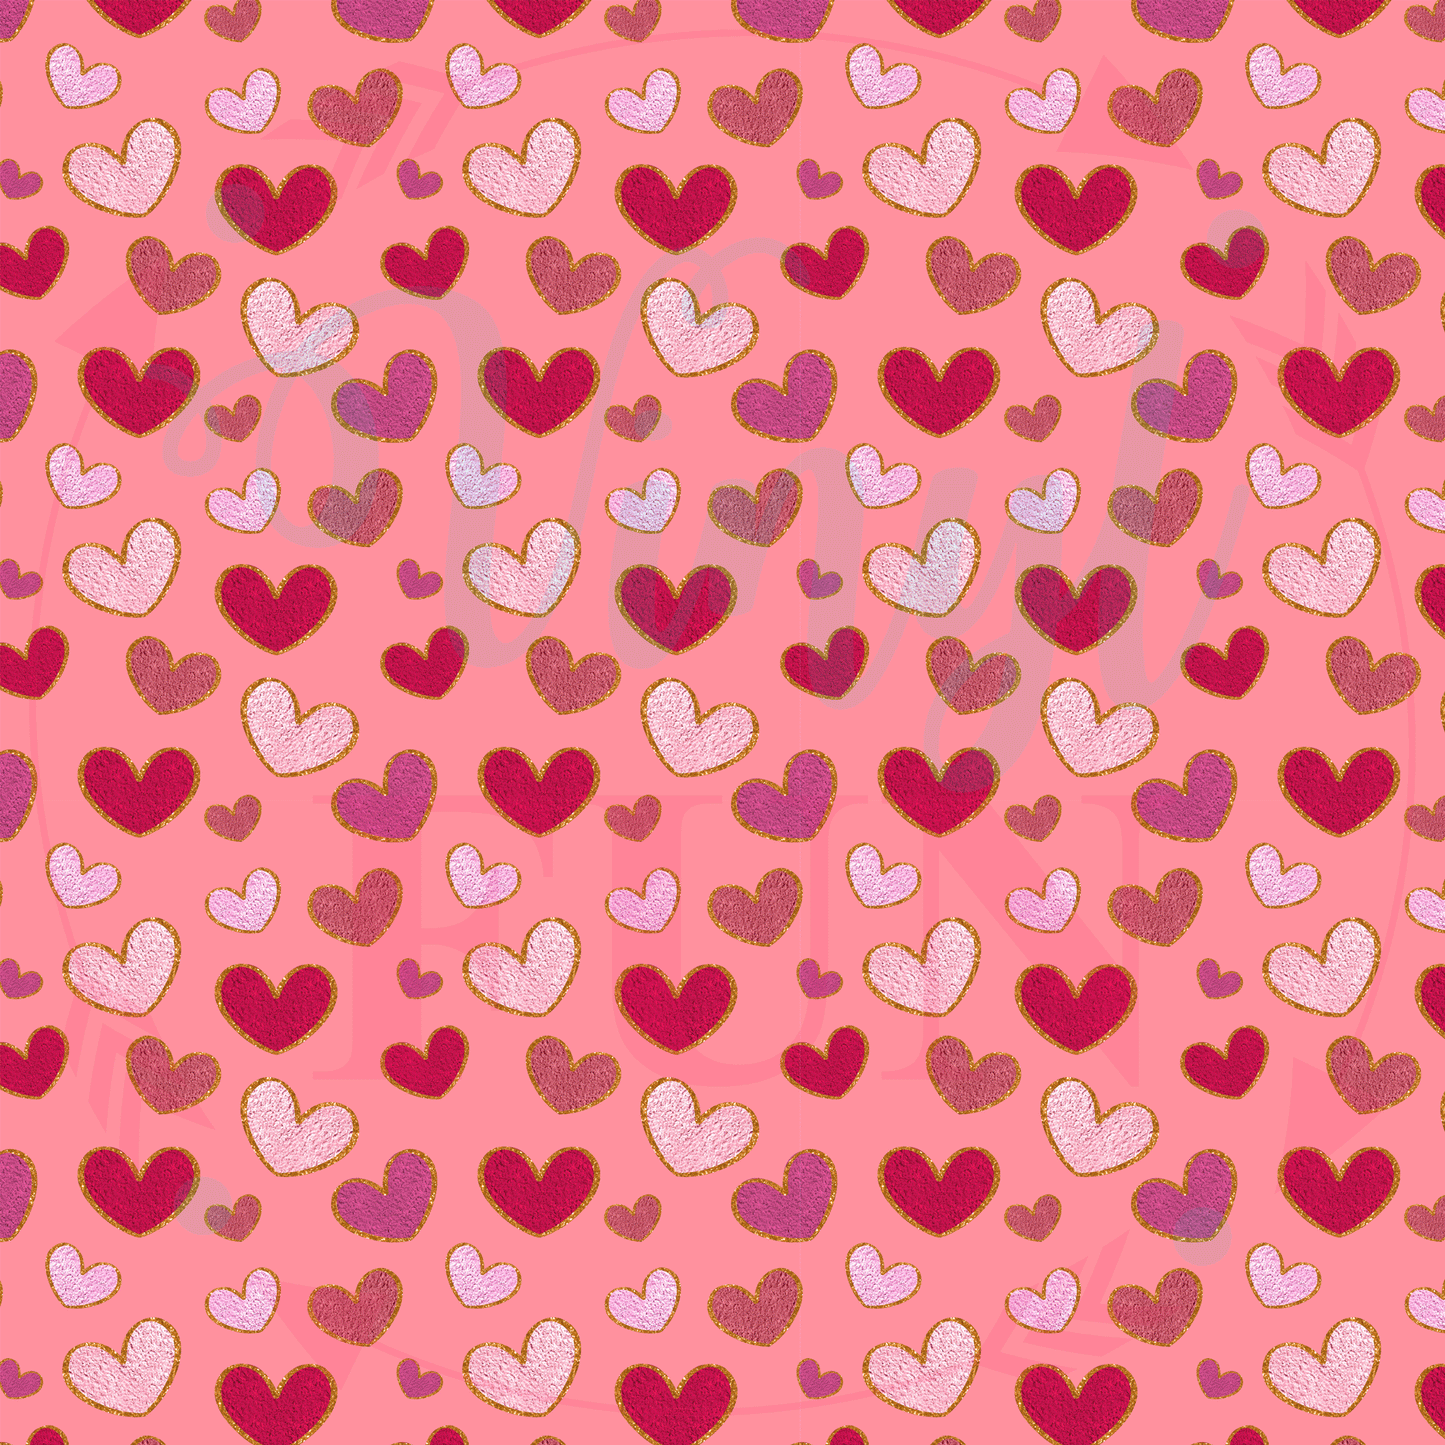 Textured Hearts Pattern